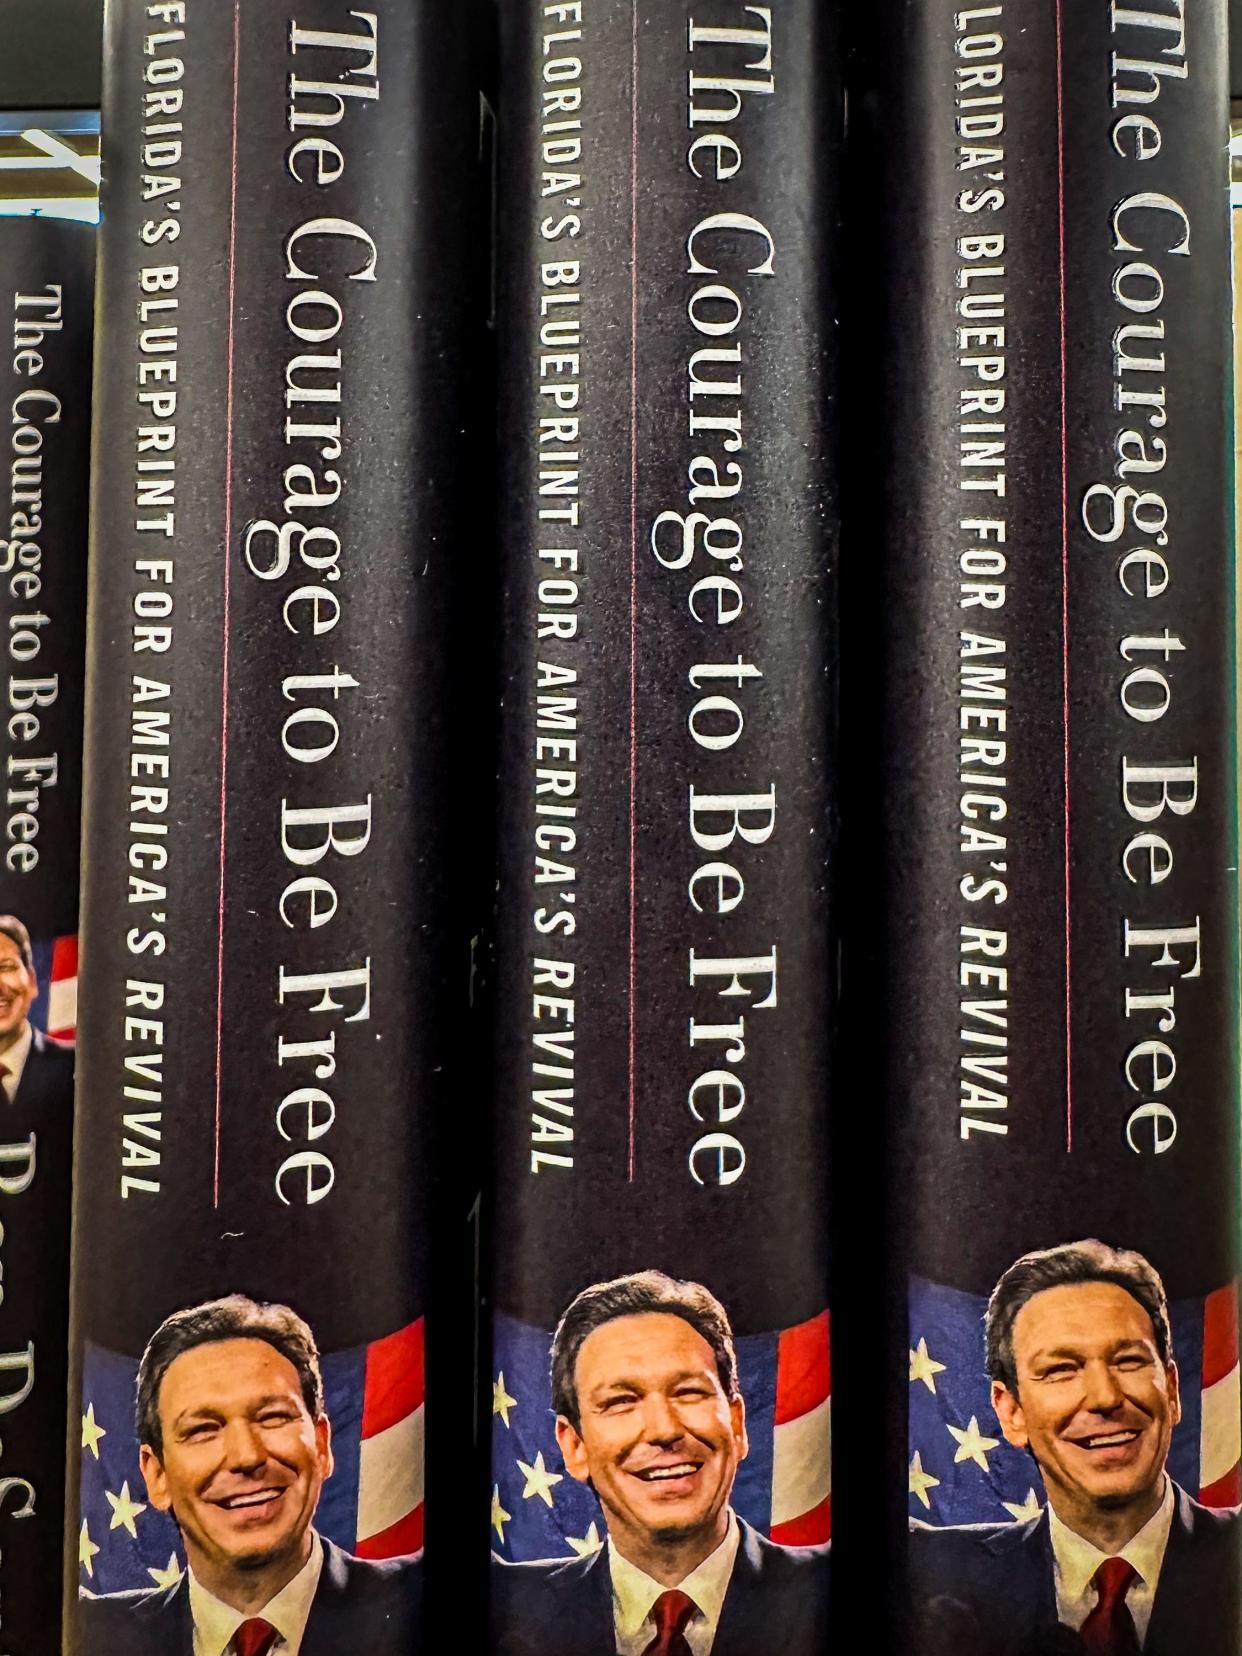 Copies of Gov. Ron DeSantis' campaign-bio book, "The Courage to be Free."